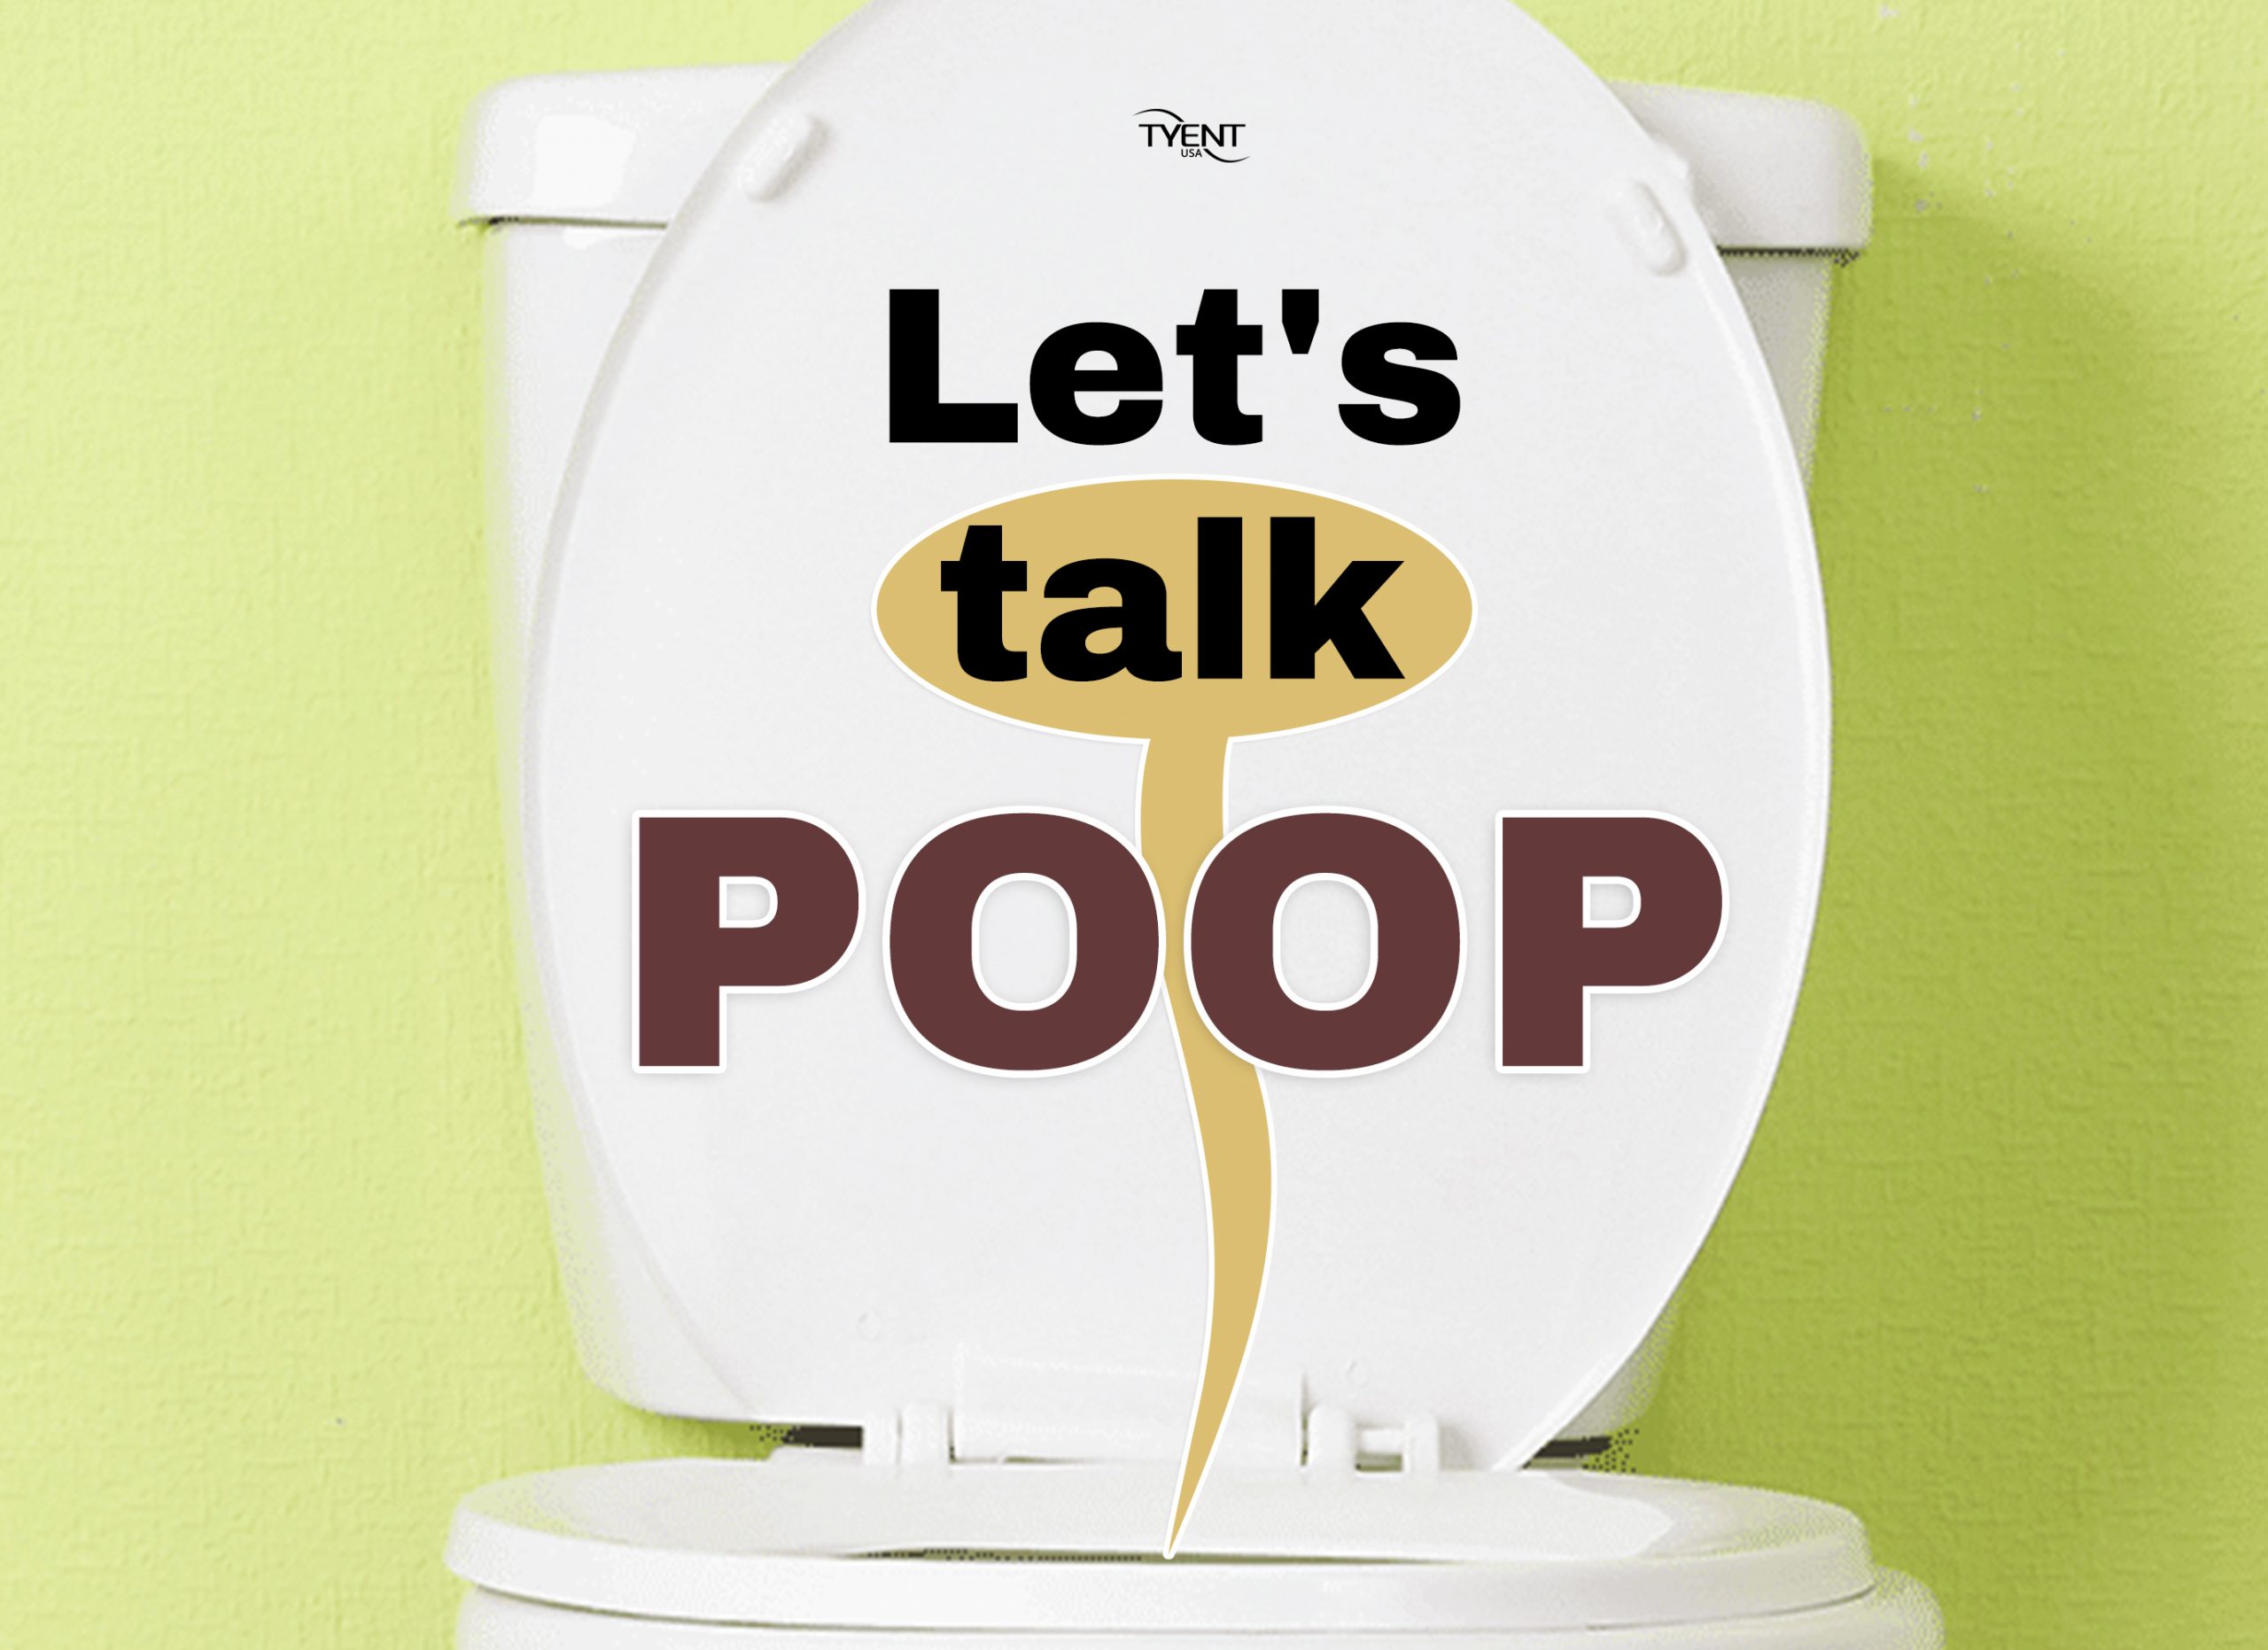 Lets talk poop